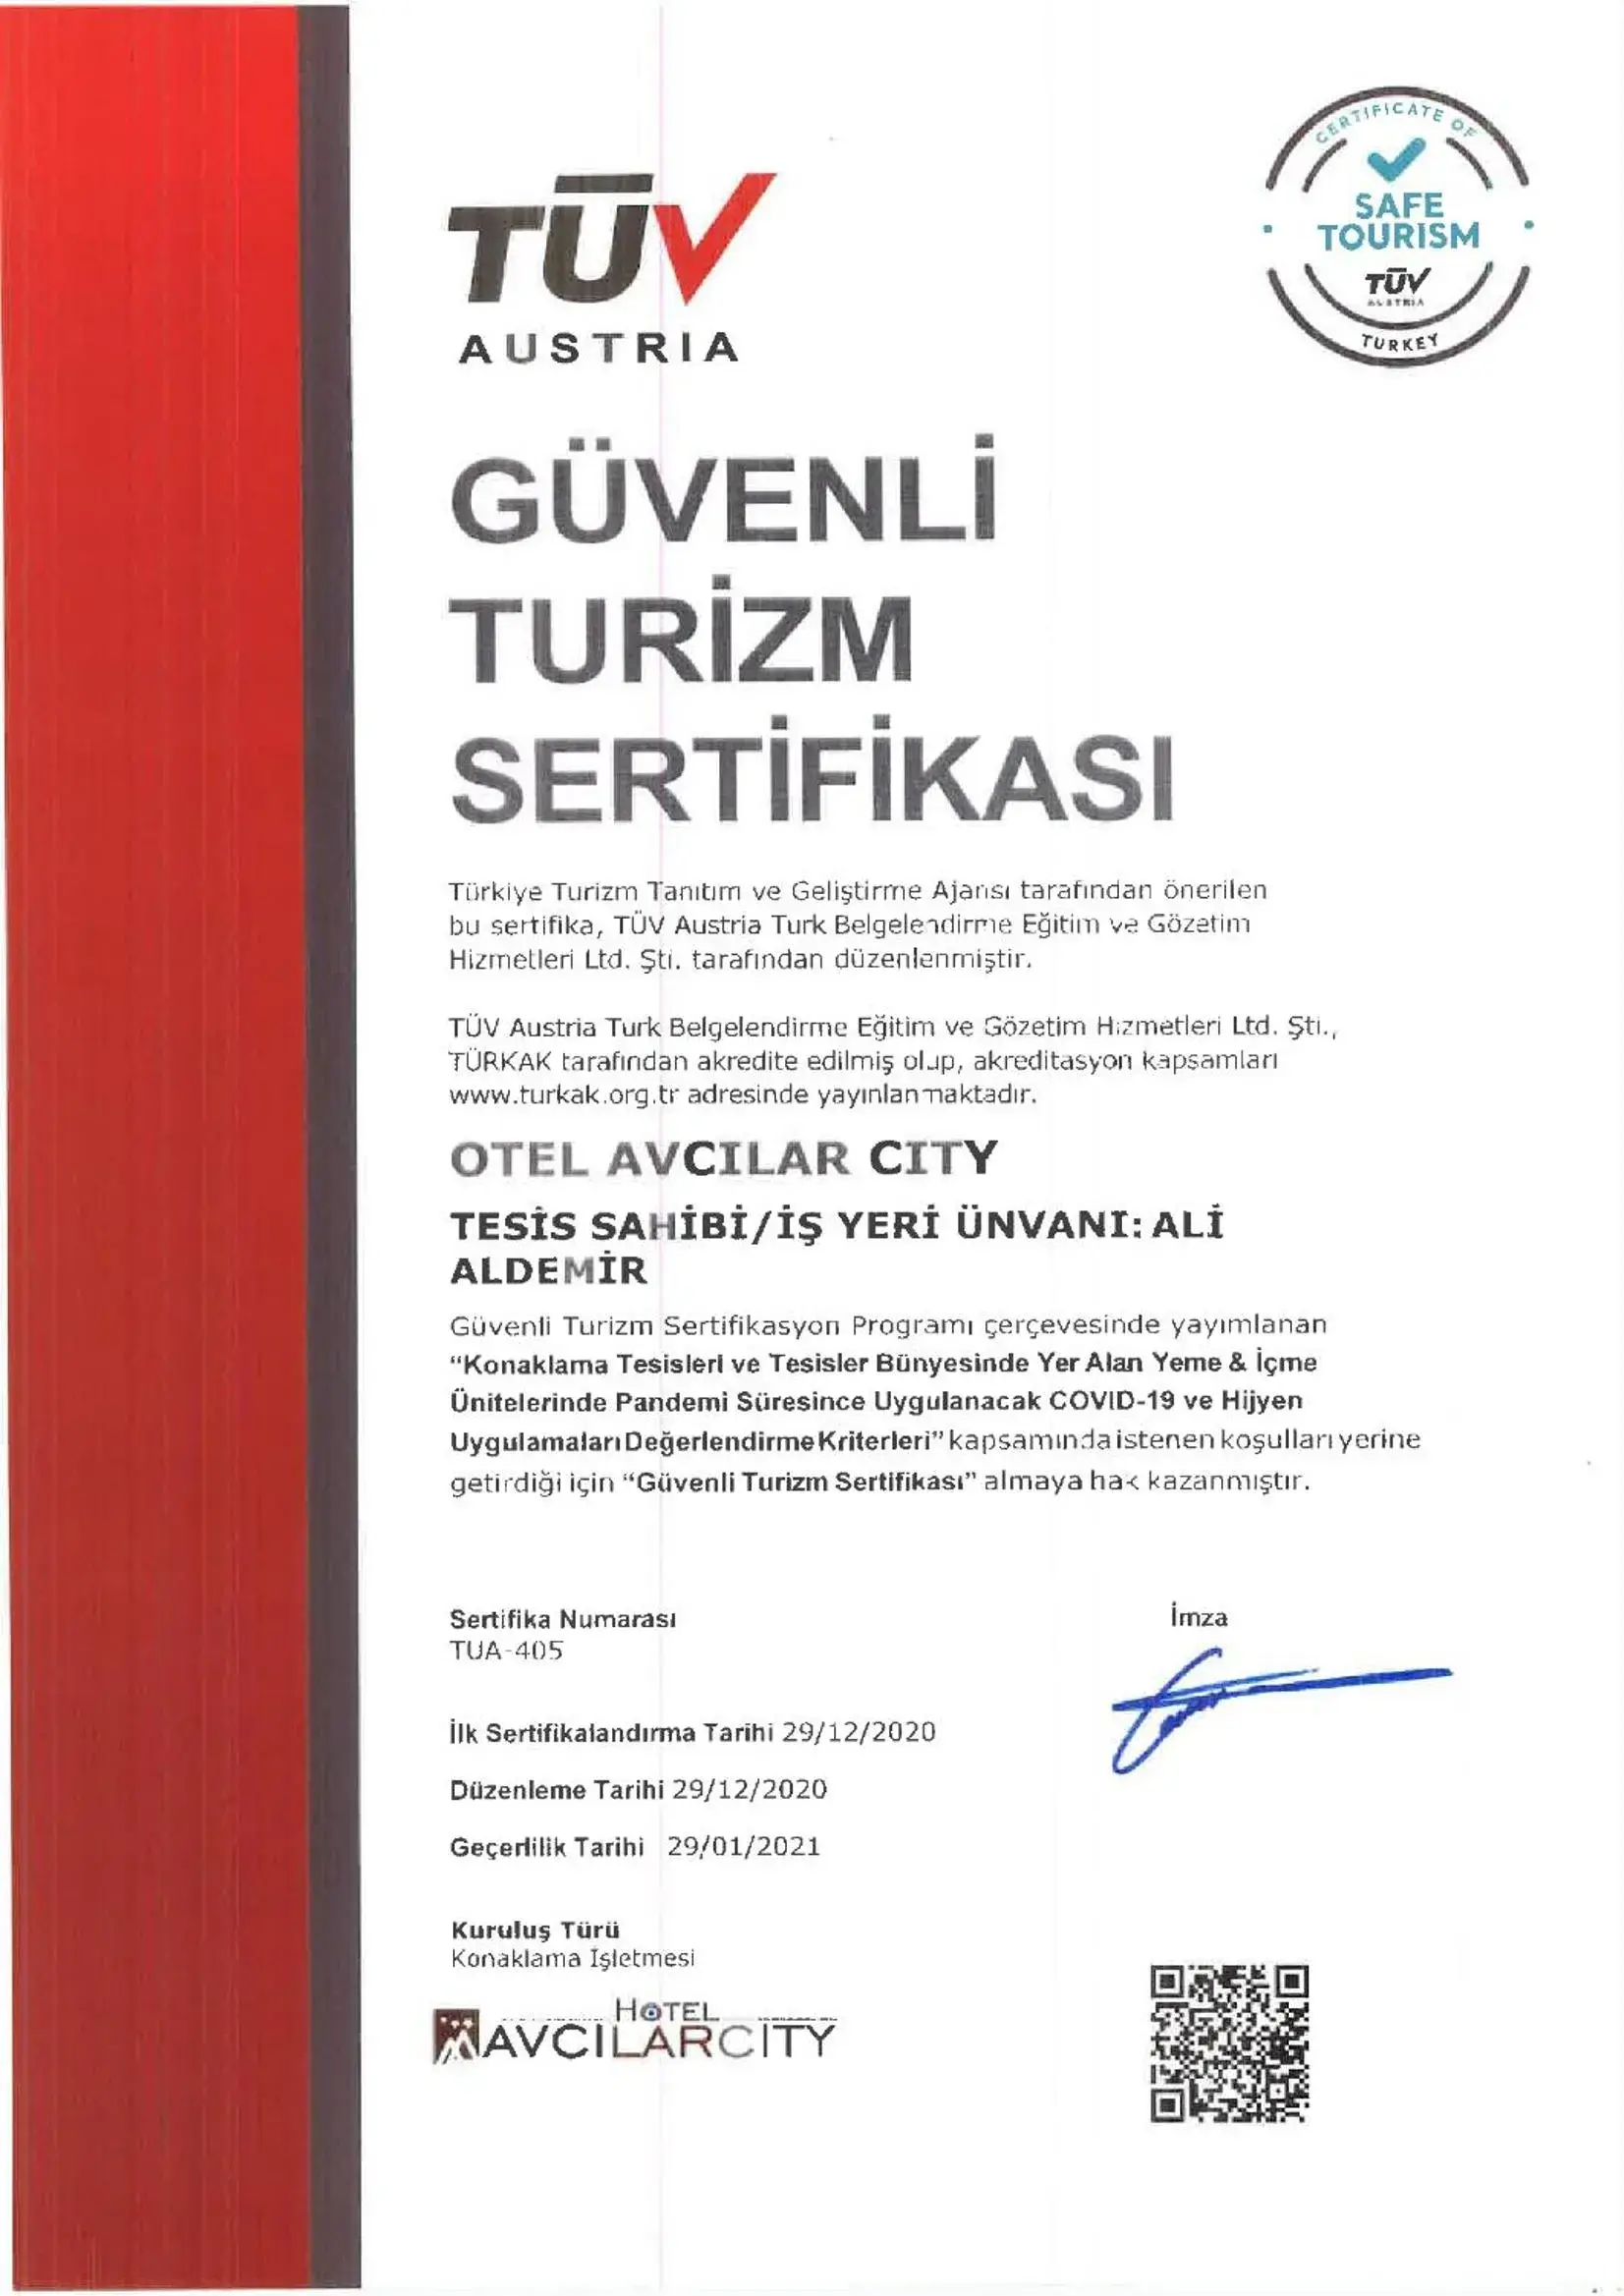 Logo/Certificate/Sign in Hotel Avcilar City